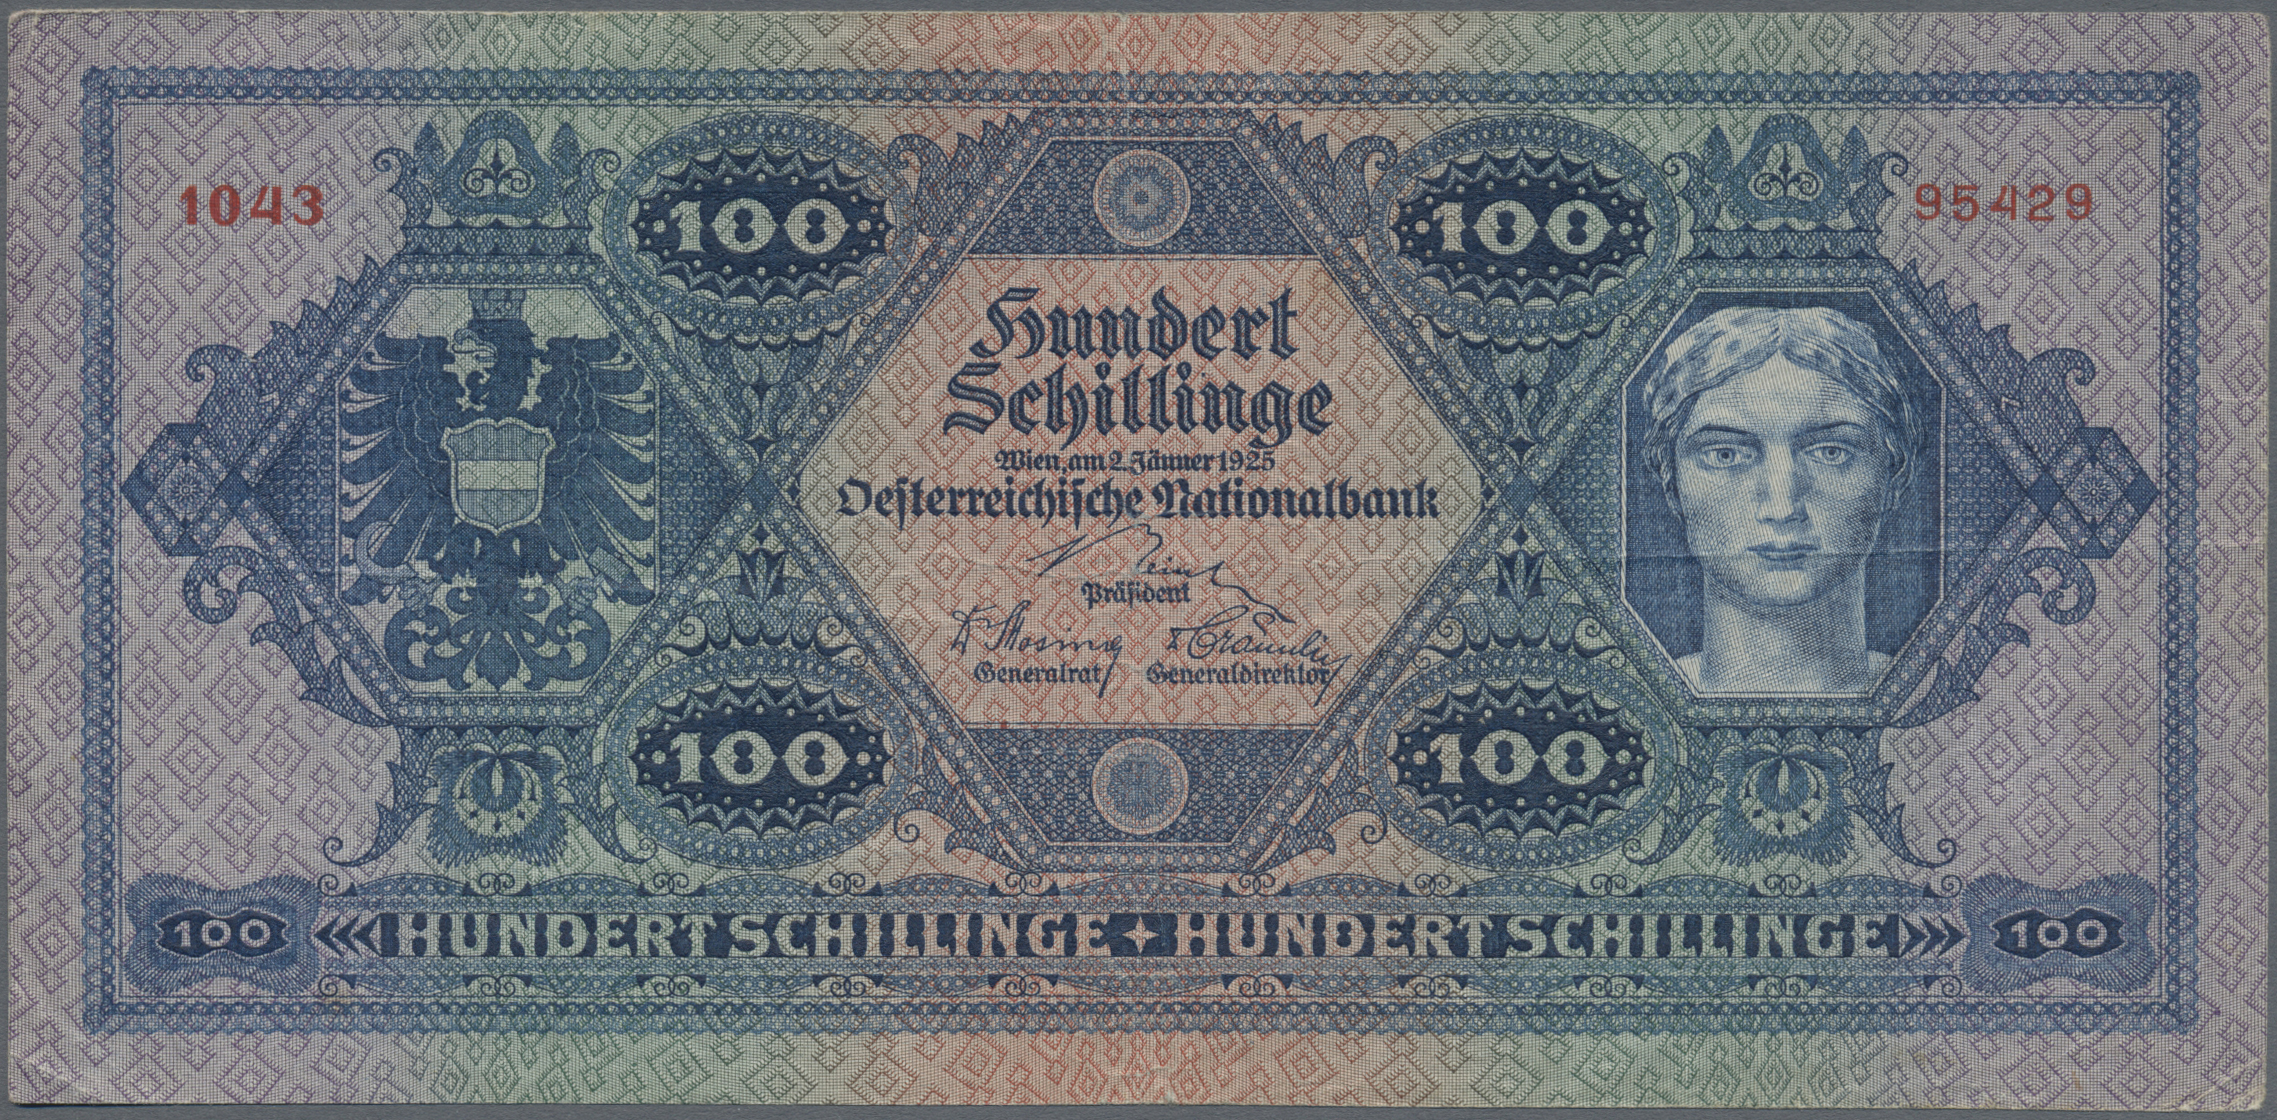 Lot 101 - Austria / Österreich | Banknoten  -  Auktionshaus Christoph Gärtner GmbH & Co. KG Bank notes Auction #42 Day 1